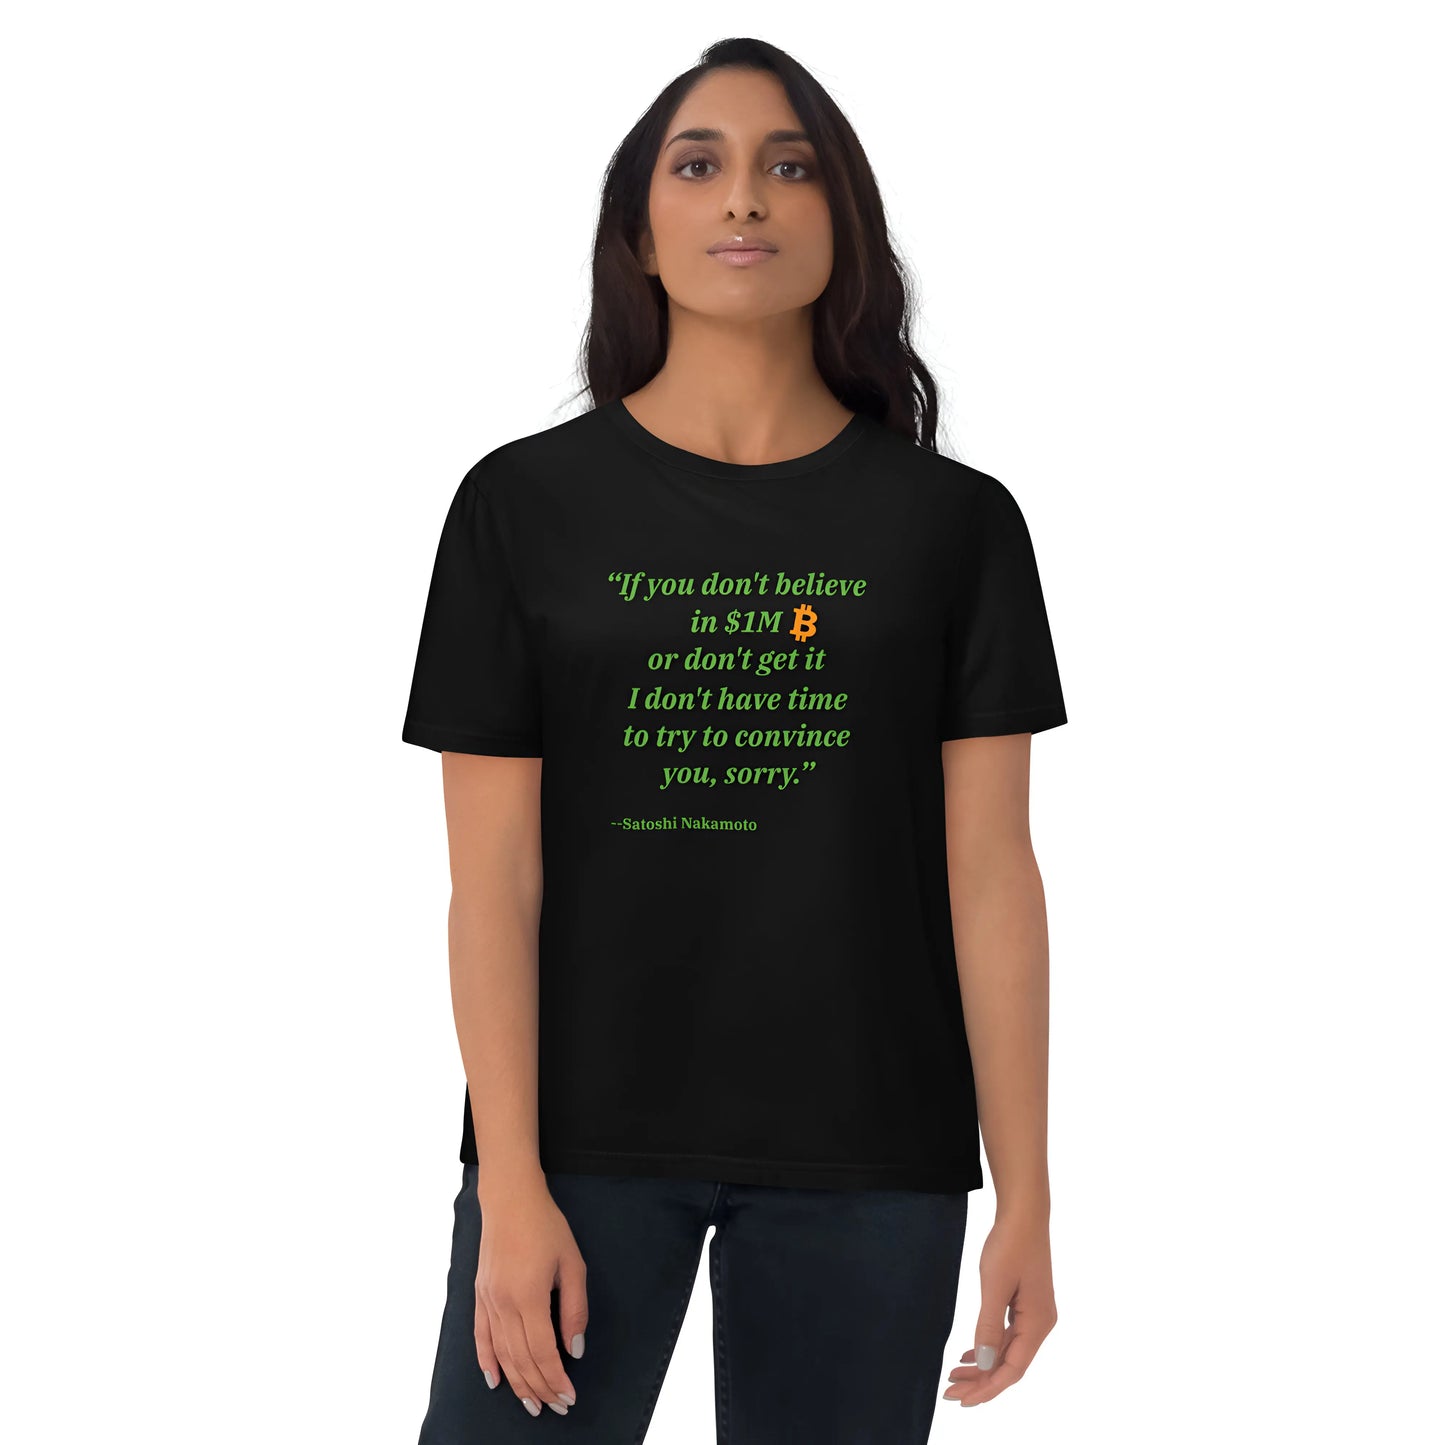 $1M Bitcoin - Premium Unisex Organic Cotton Bitcoin T-shirt Black Color